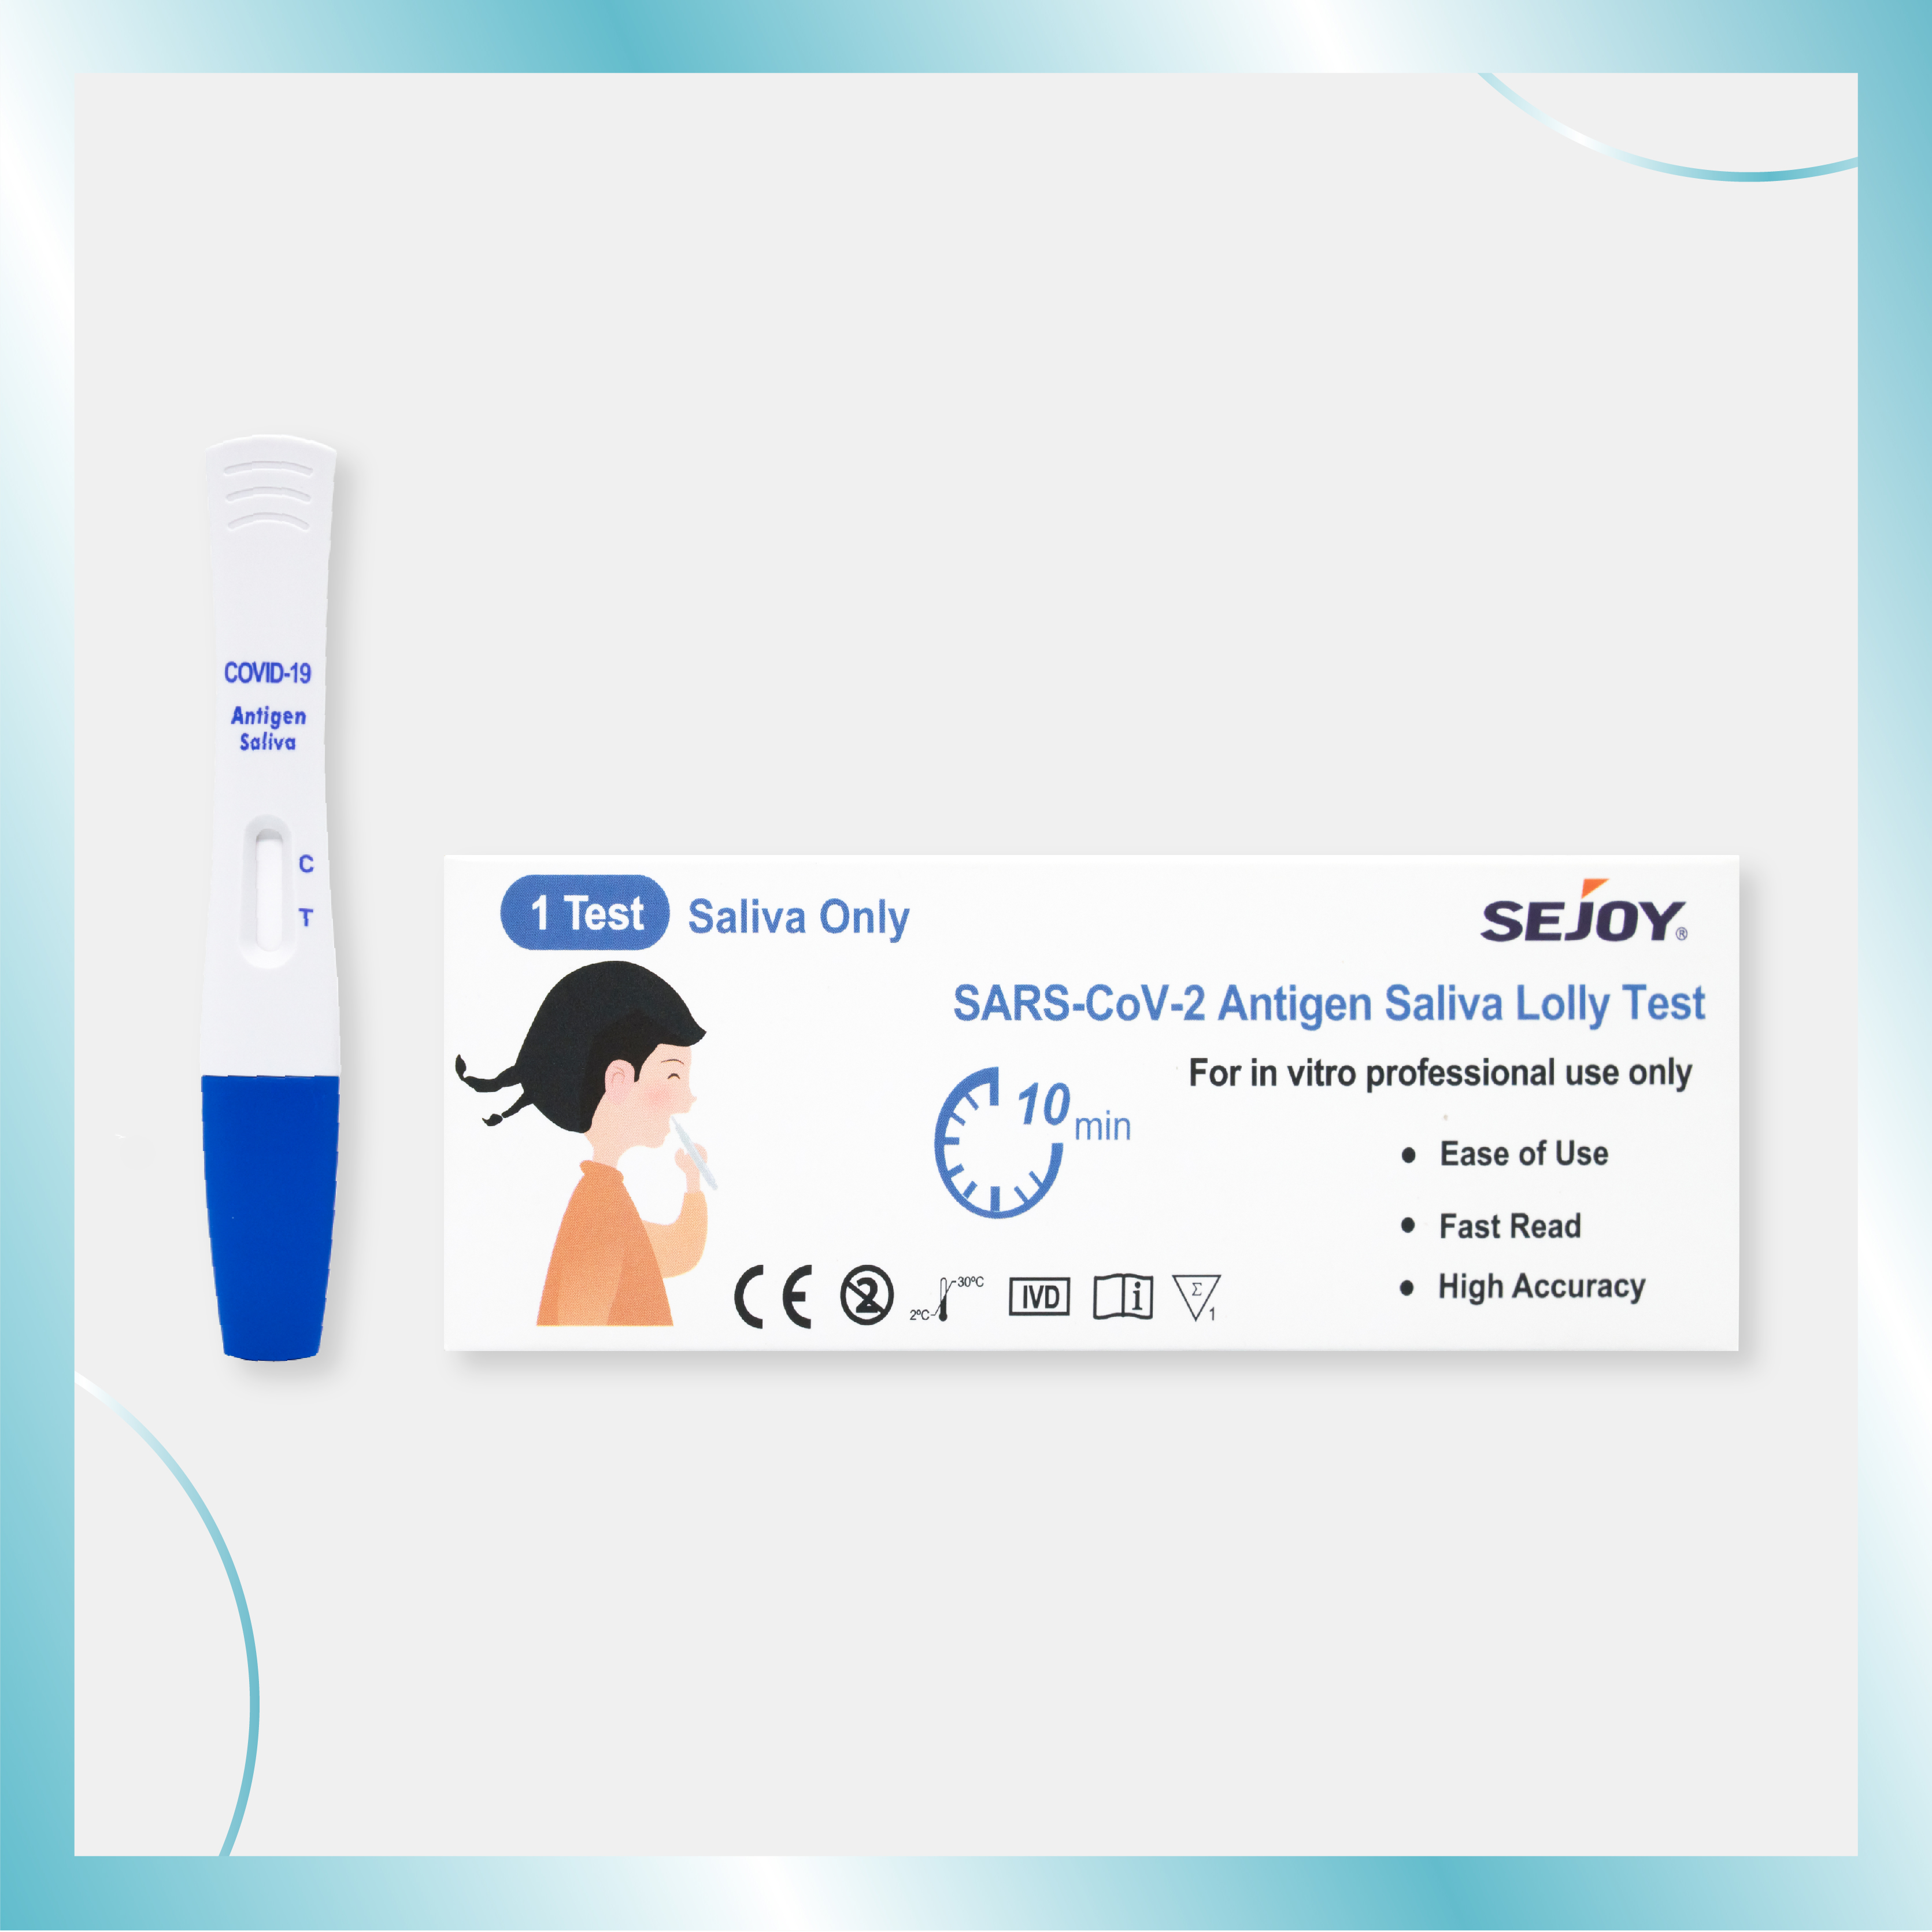 SARS-CoV-2 Antigen Saliva Lolly Test